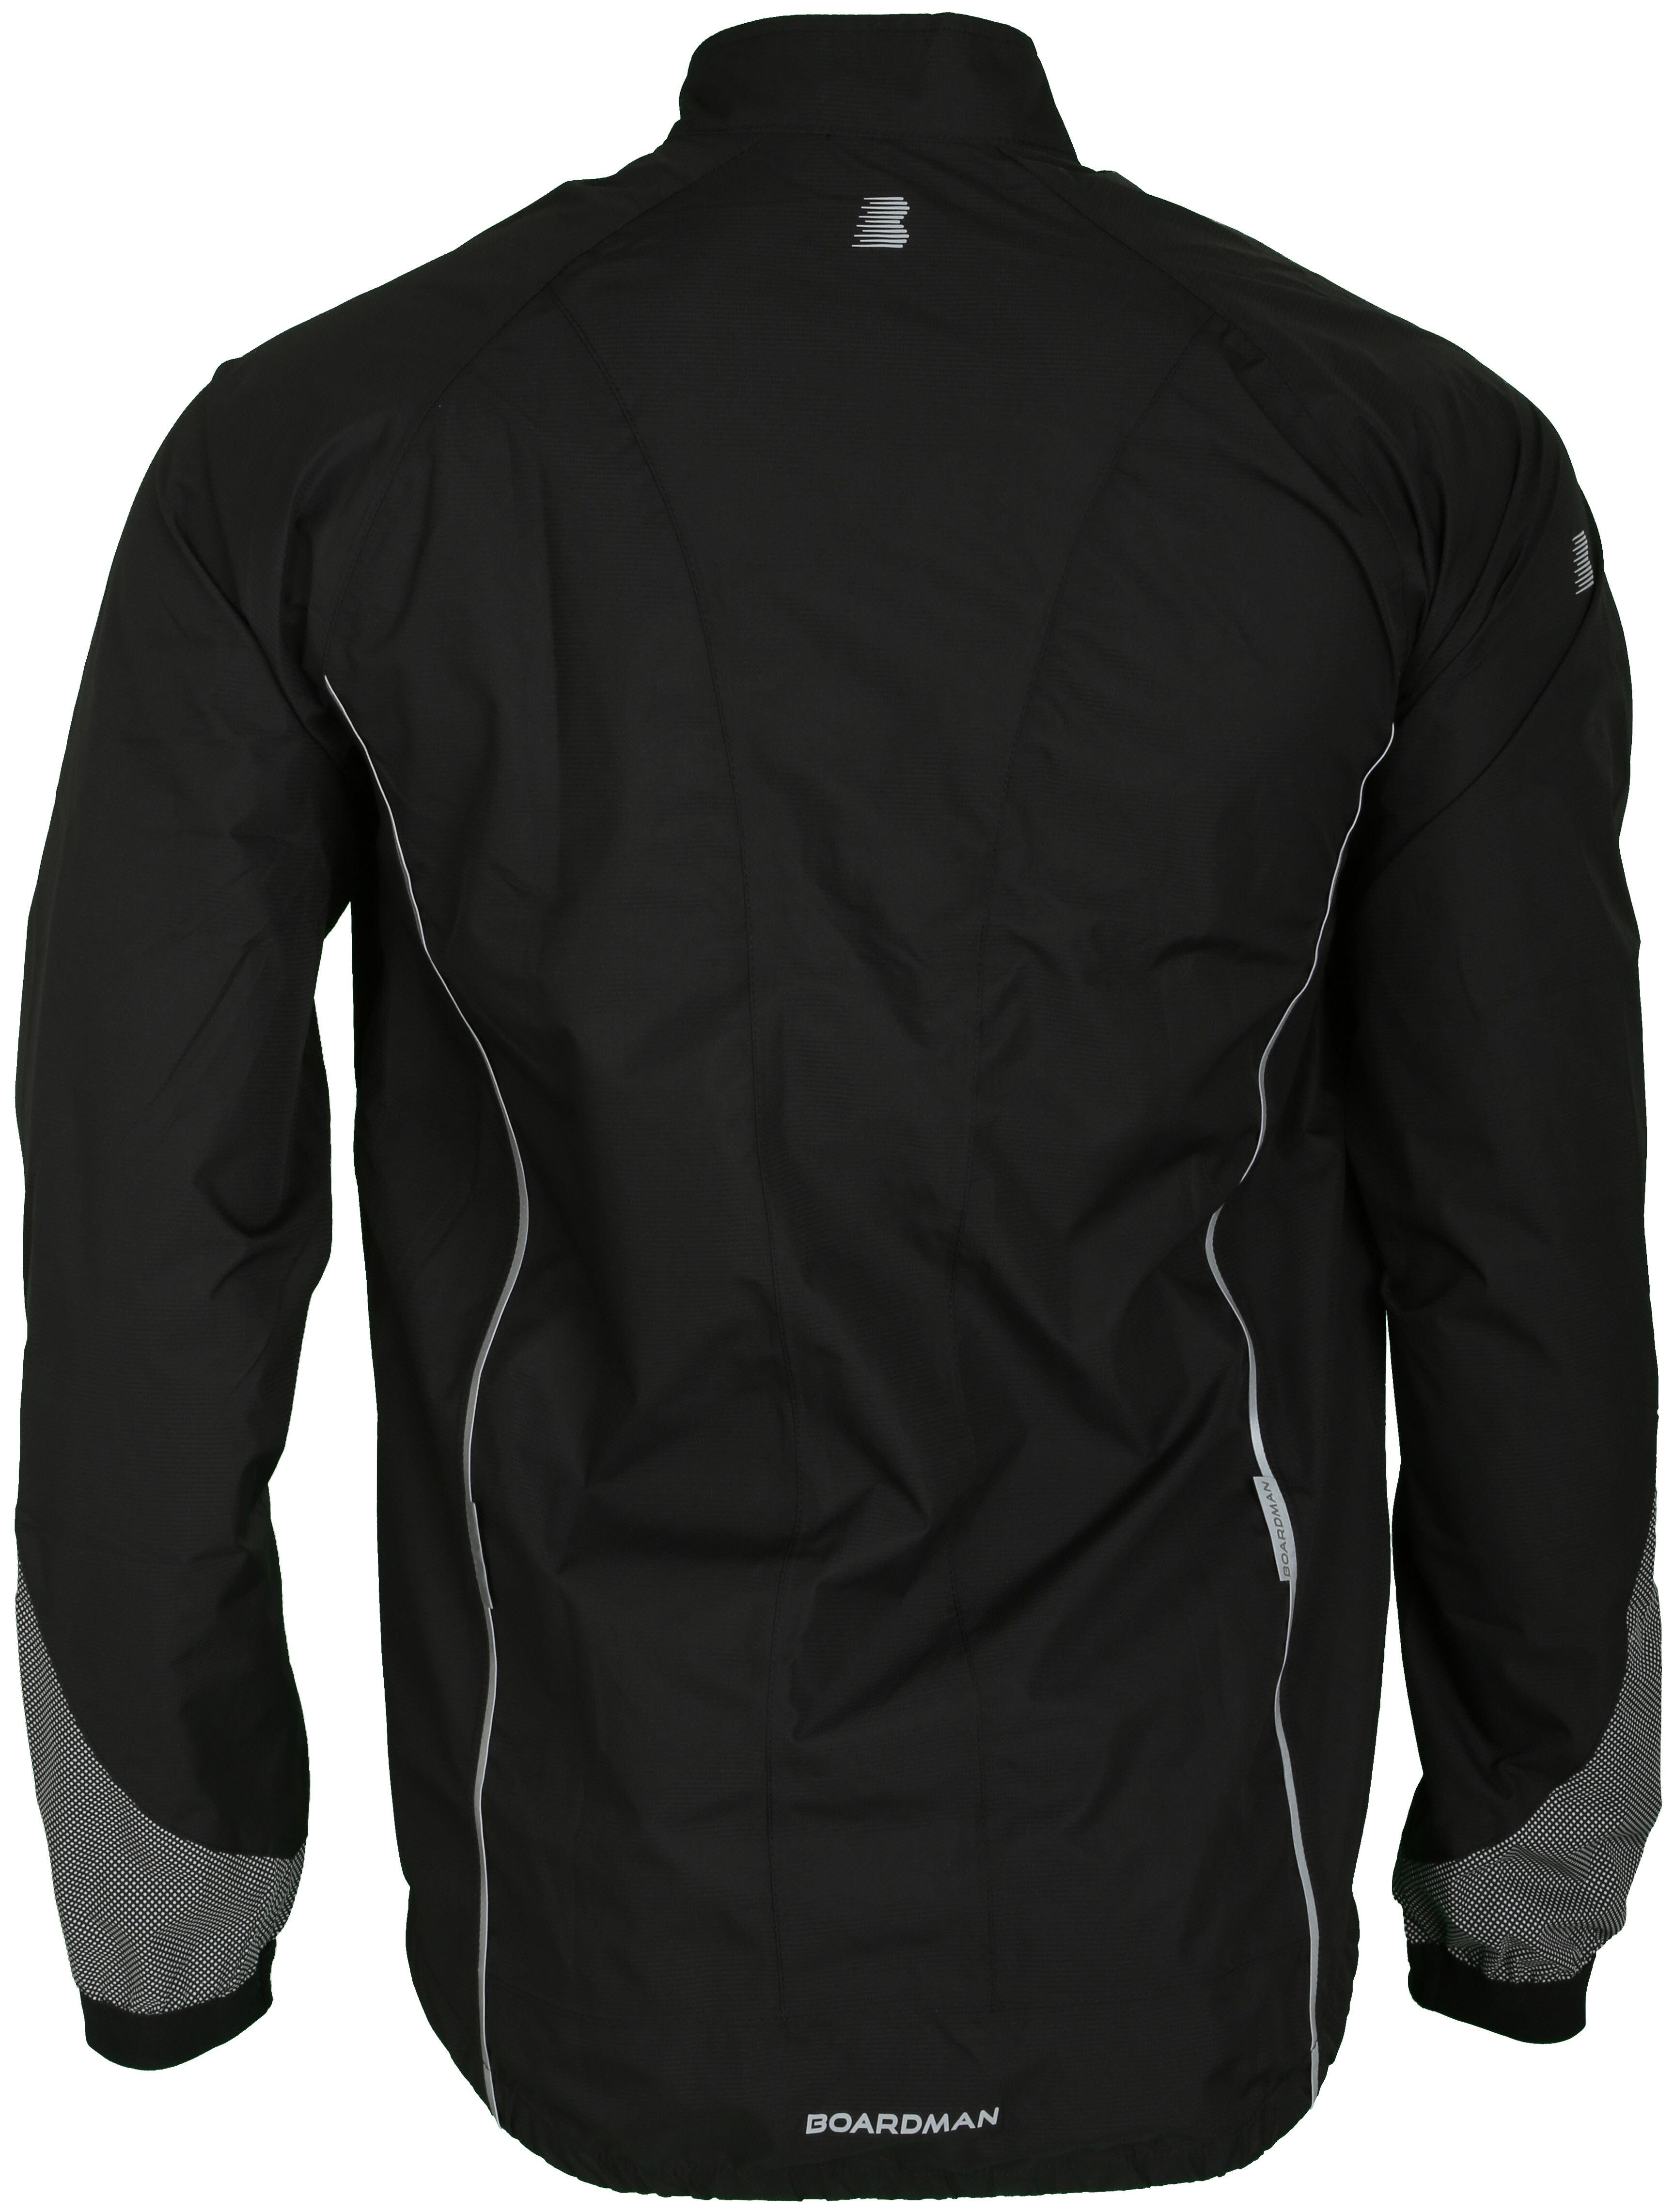 mens waterproof jackets boardman mens waterproof jacket black ULWZIRJ